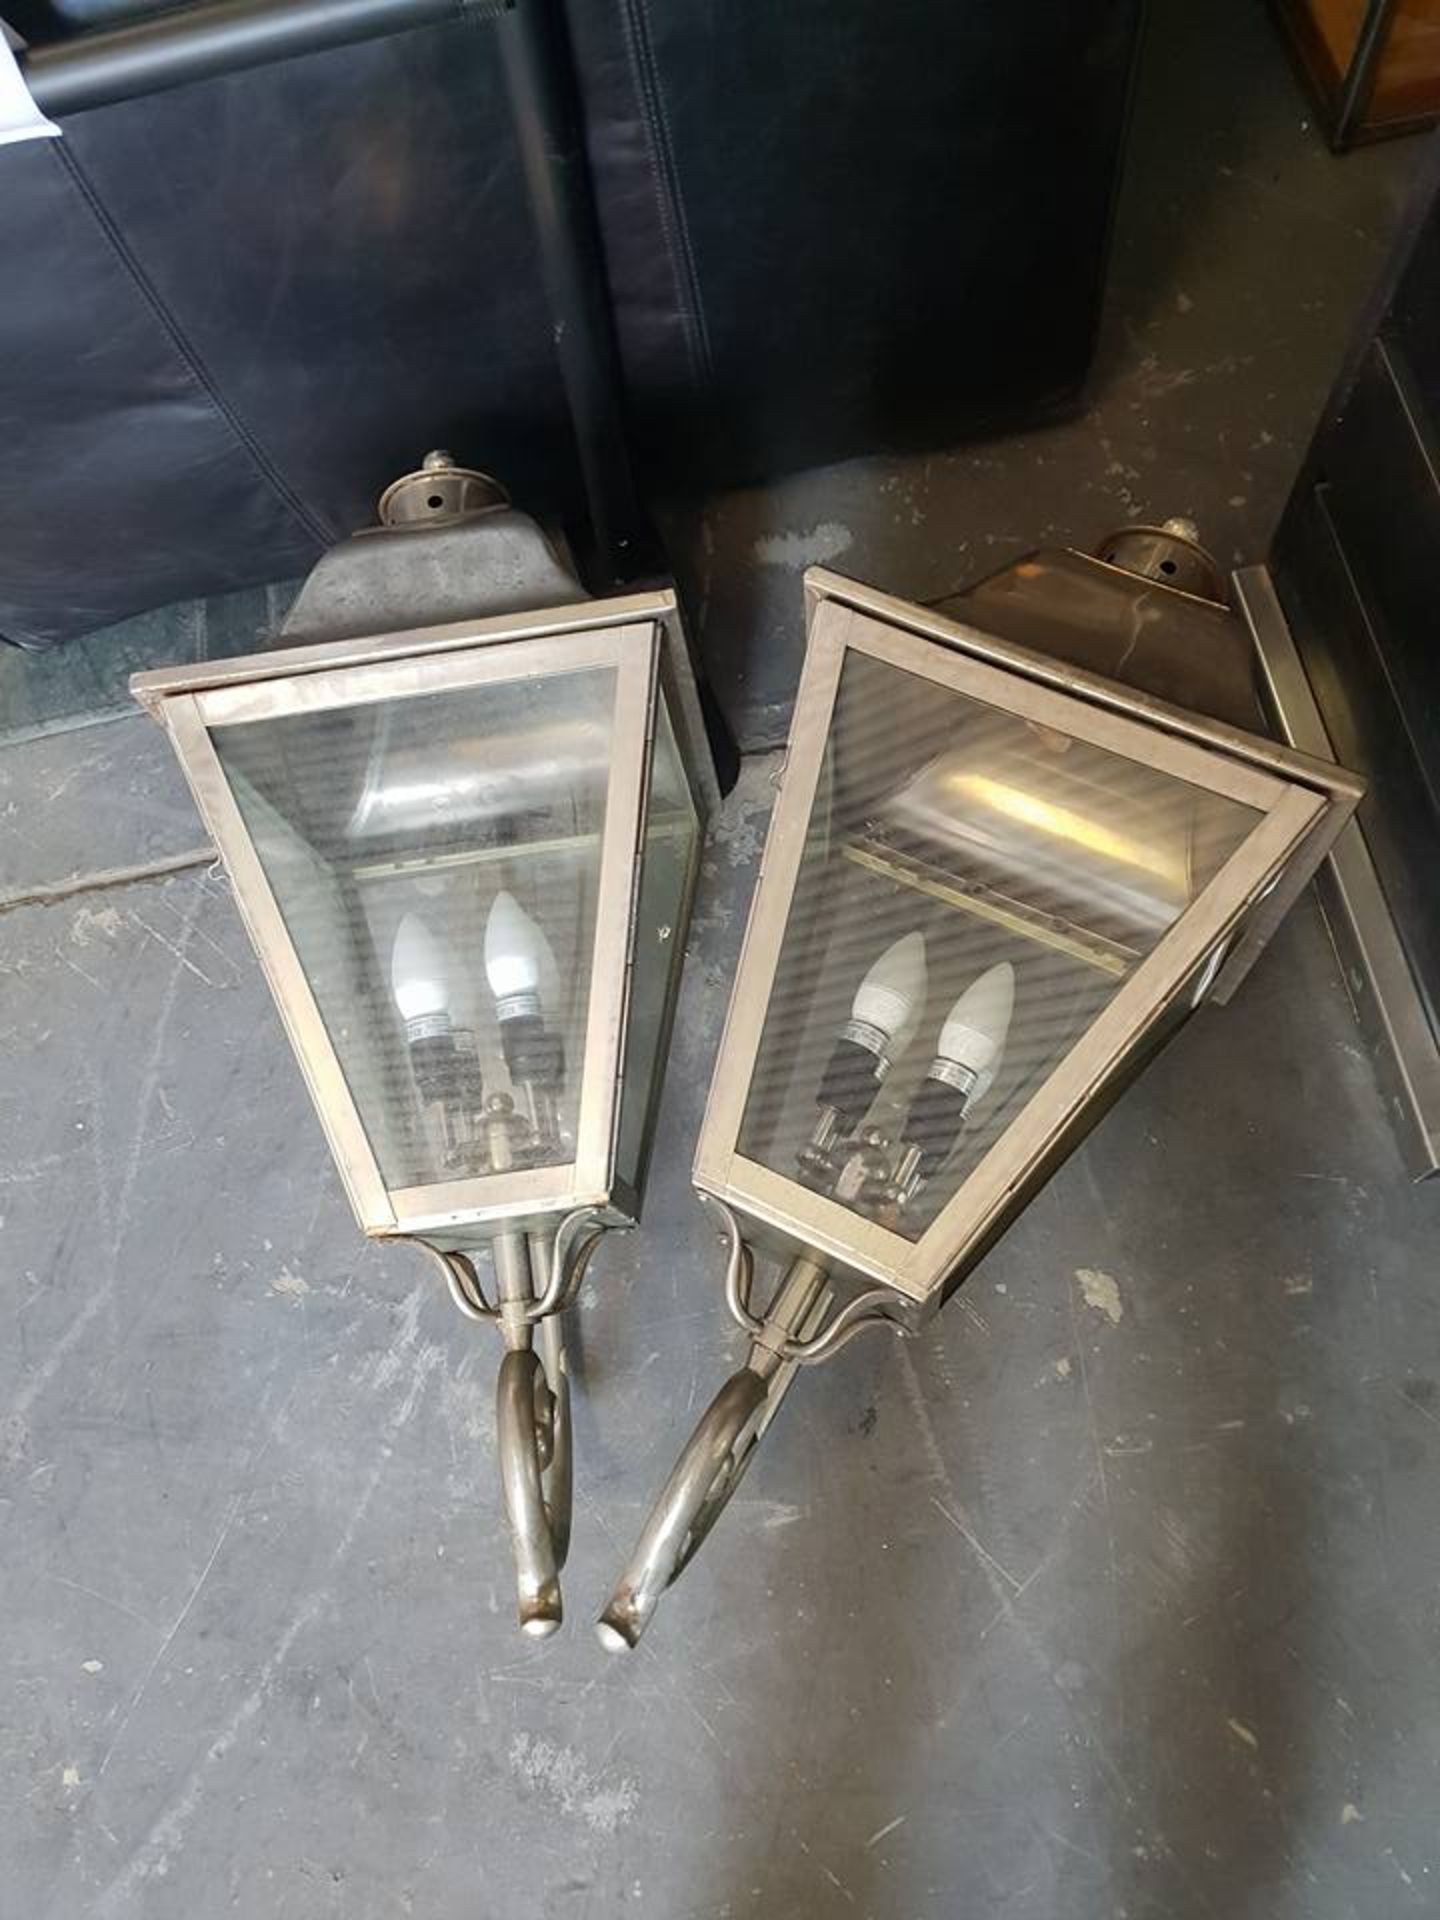 A Pair of Silver Metal IP65 Coach Lanterns Portch Lights 90 x 33 x 41cm